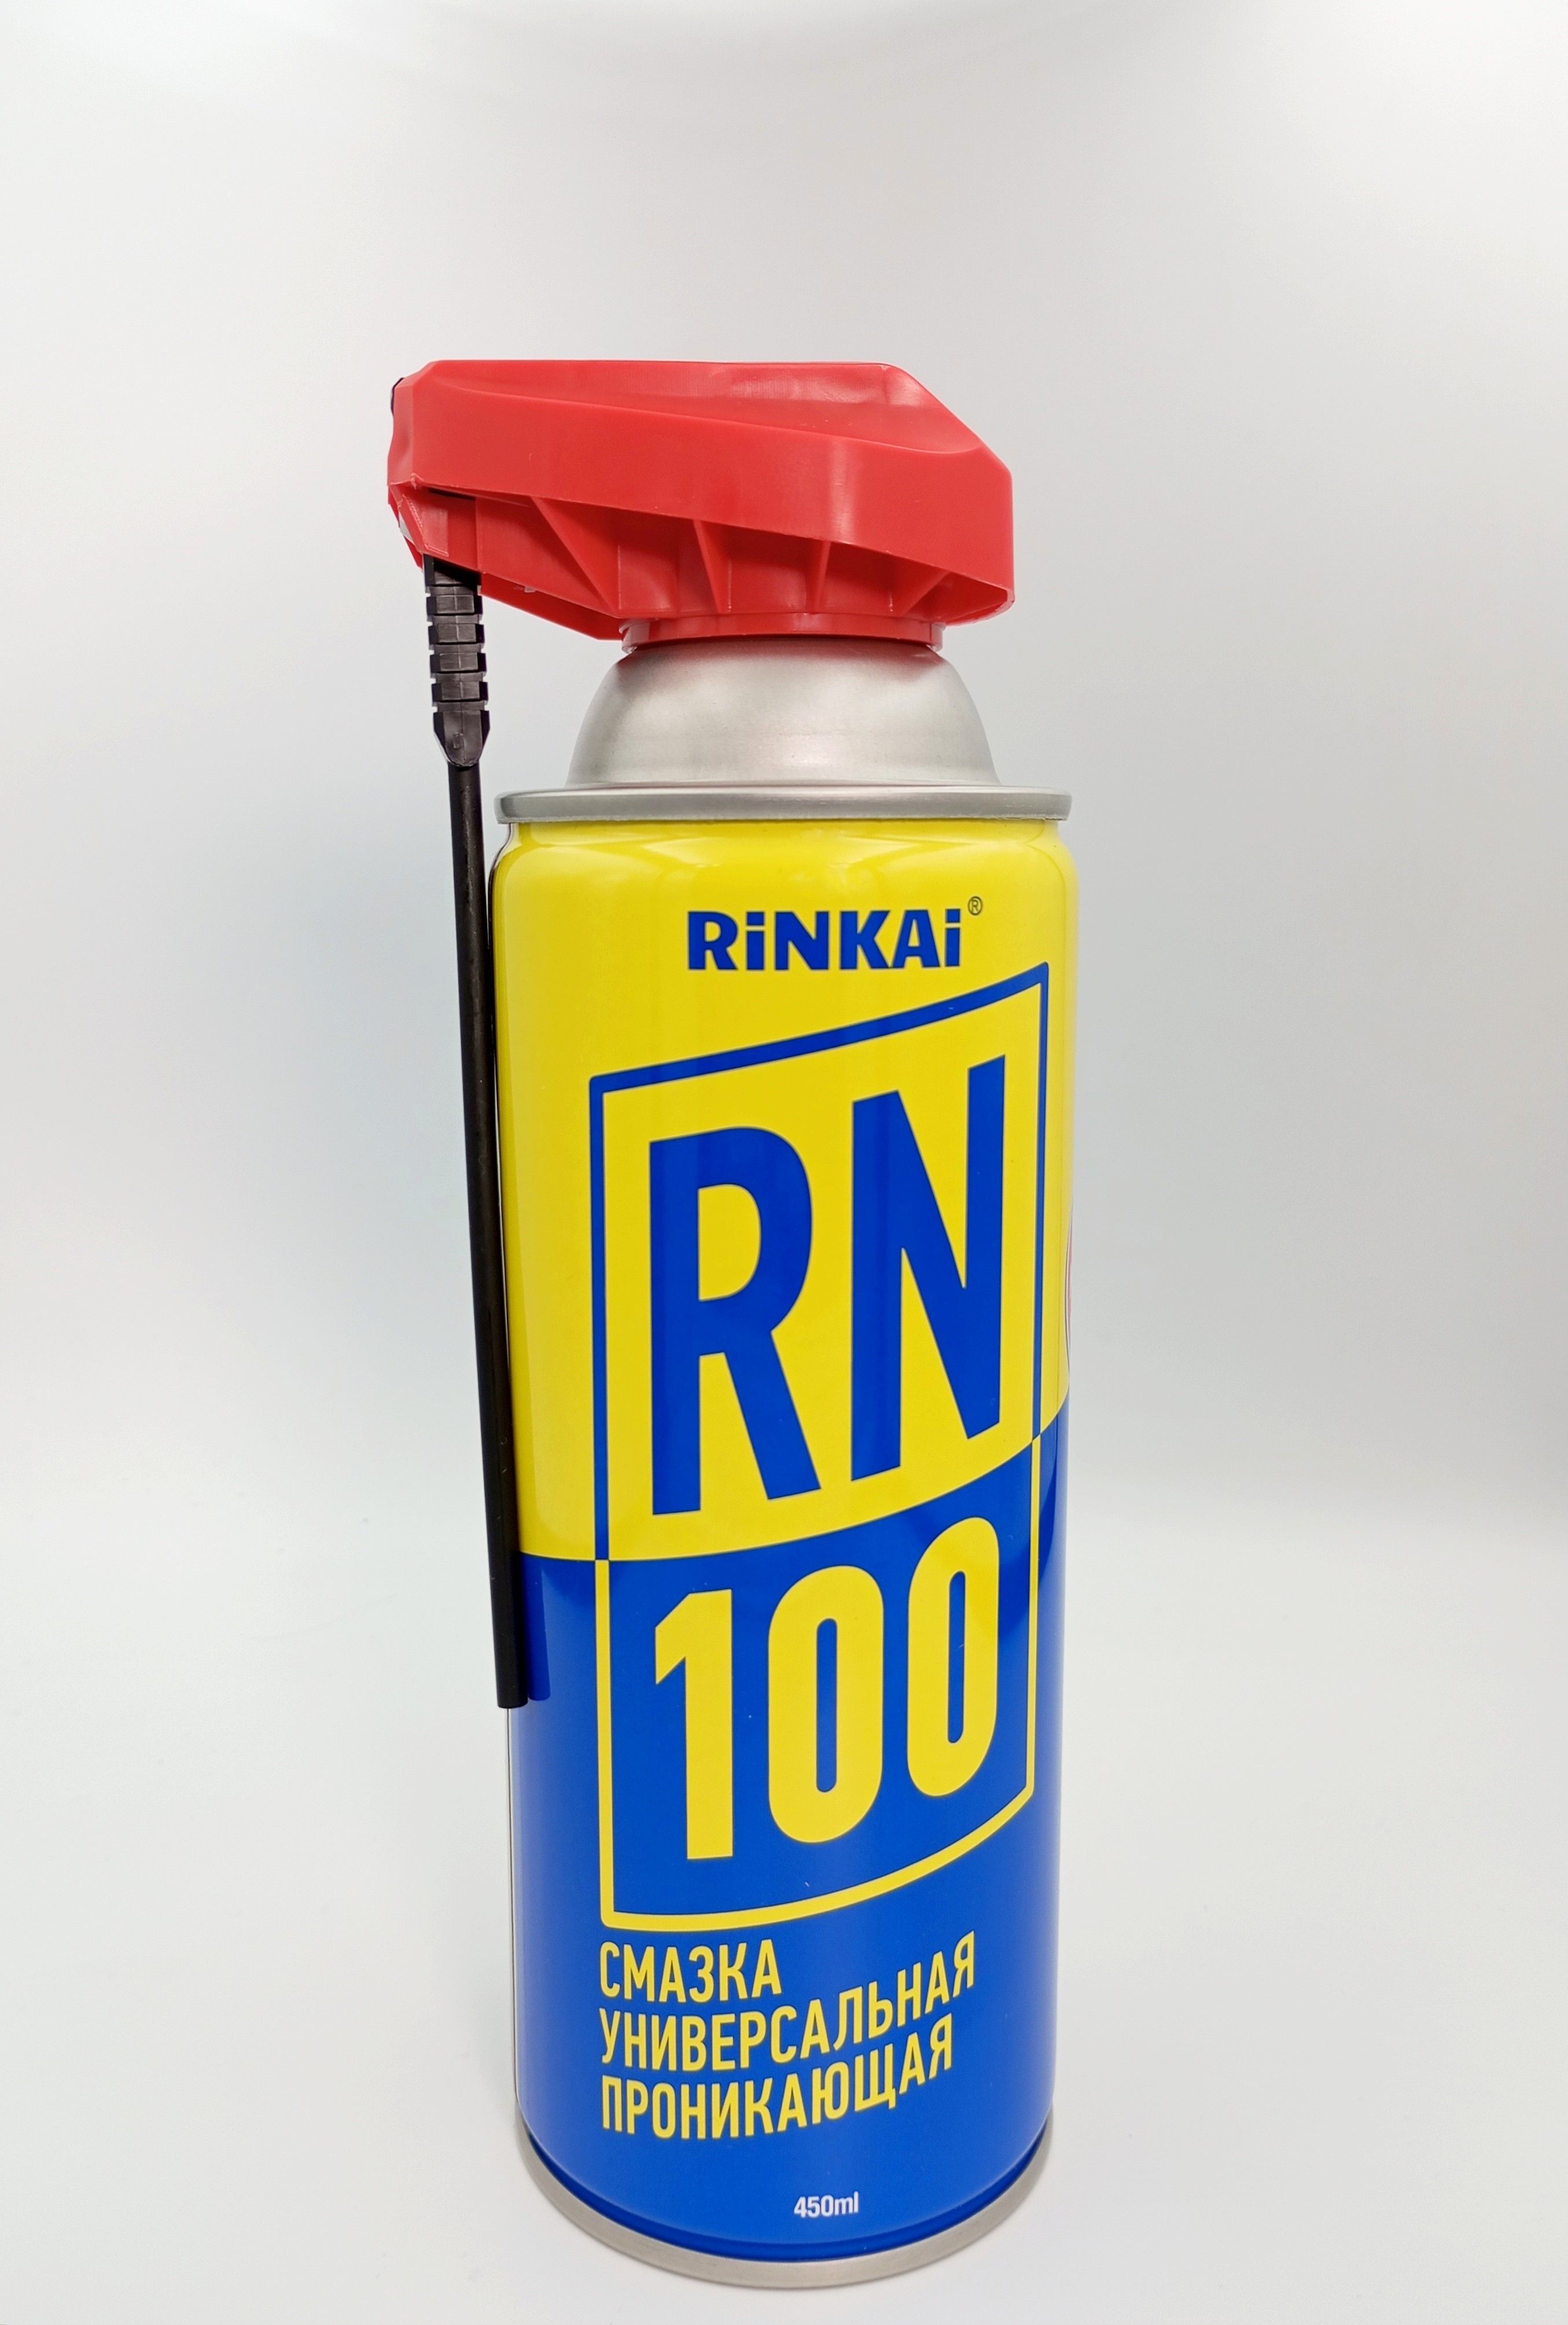 Rinkai RN100 Multipurpose Grease Универсальная проникающая смазка антикоррозийная 450 мл